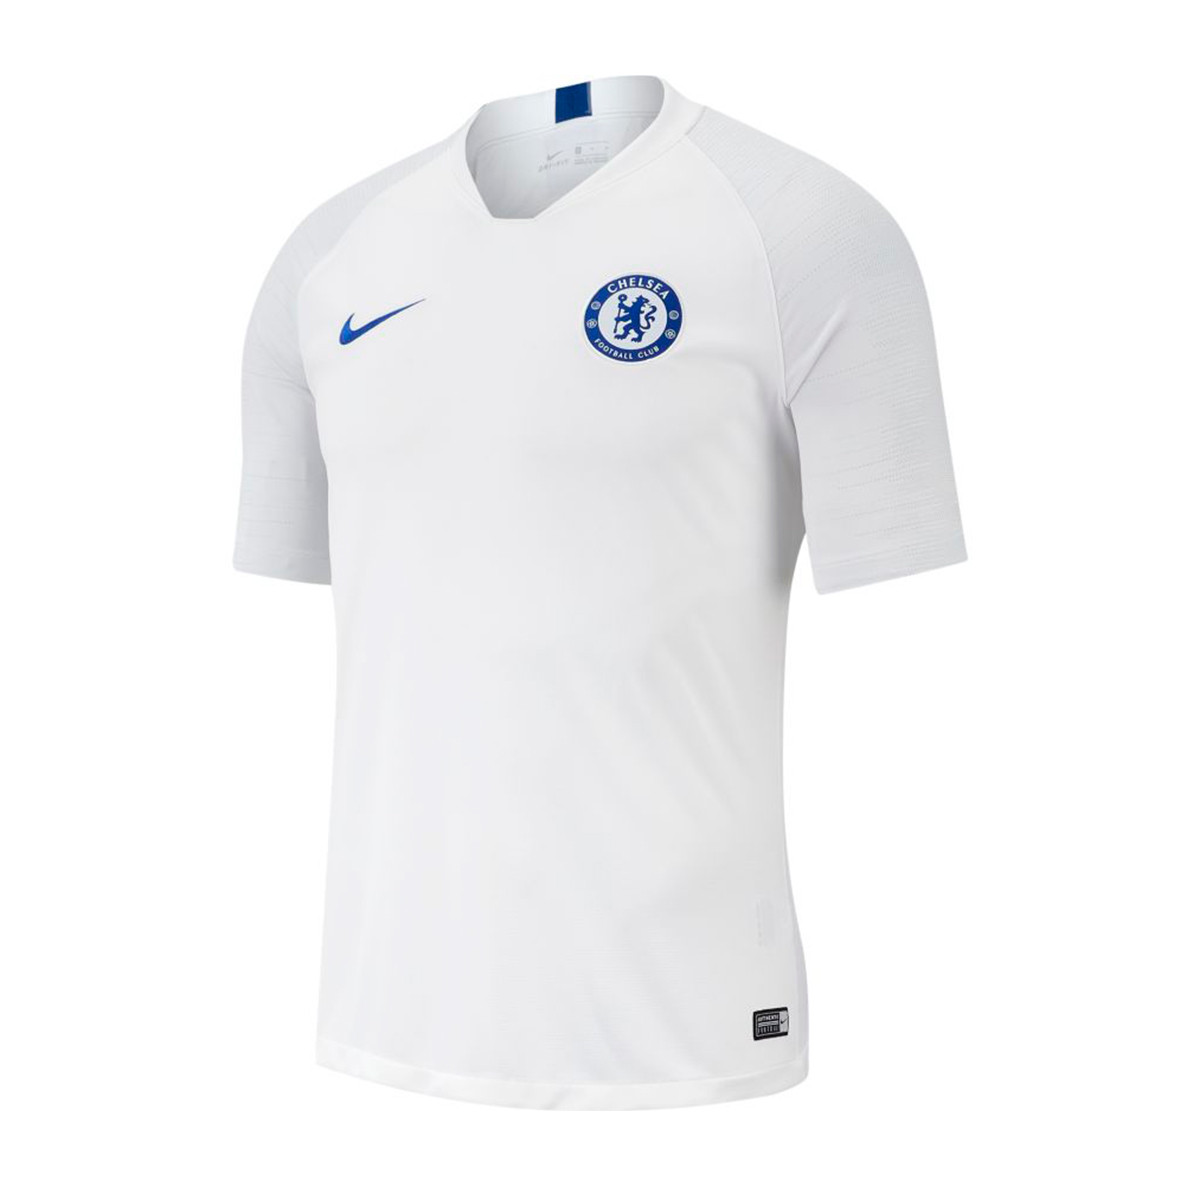 Jersey Nike Chelsea Fc Breathe Strike Ss 2019 2020 White Pure Platinum Rush Blue Futbol Emotion